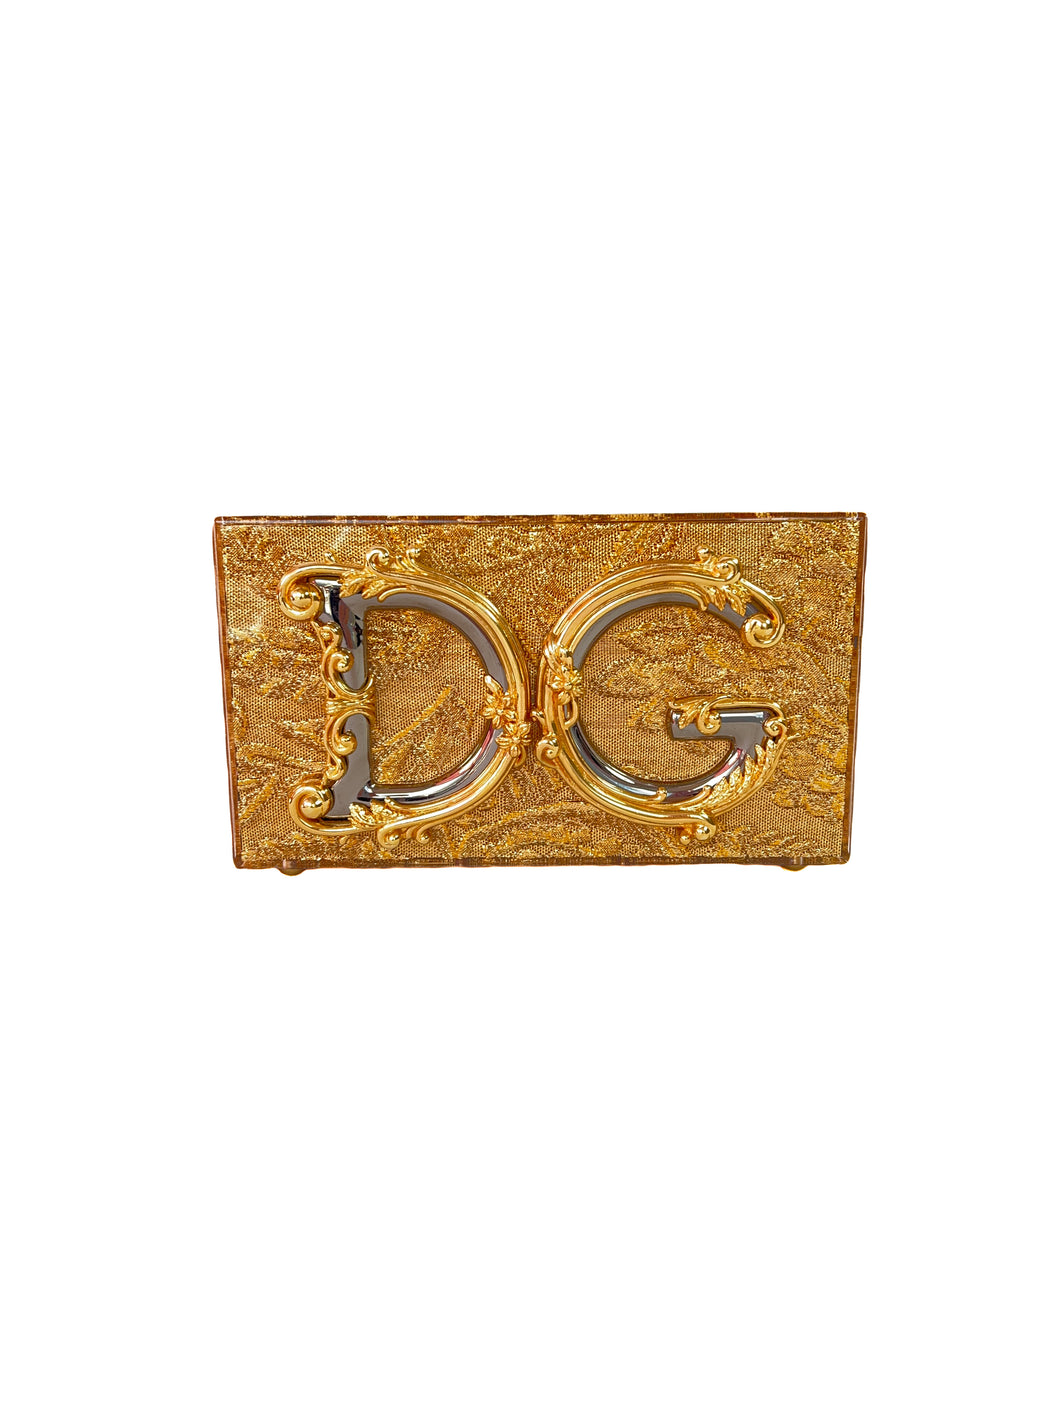 Dolce & Gabbana gold DG Girls clutch NWT